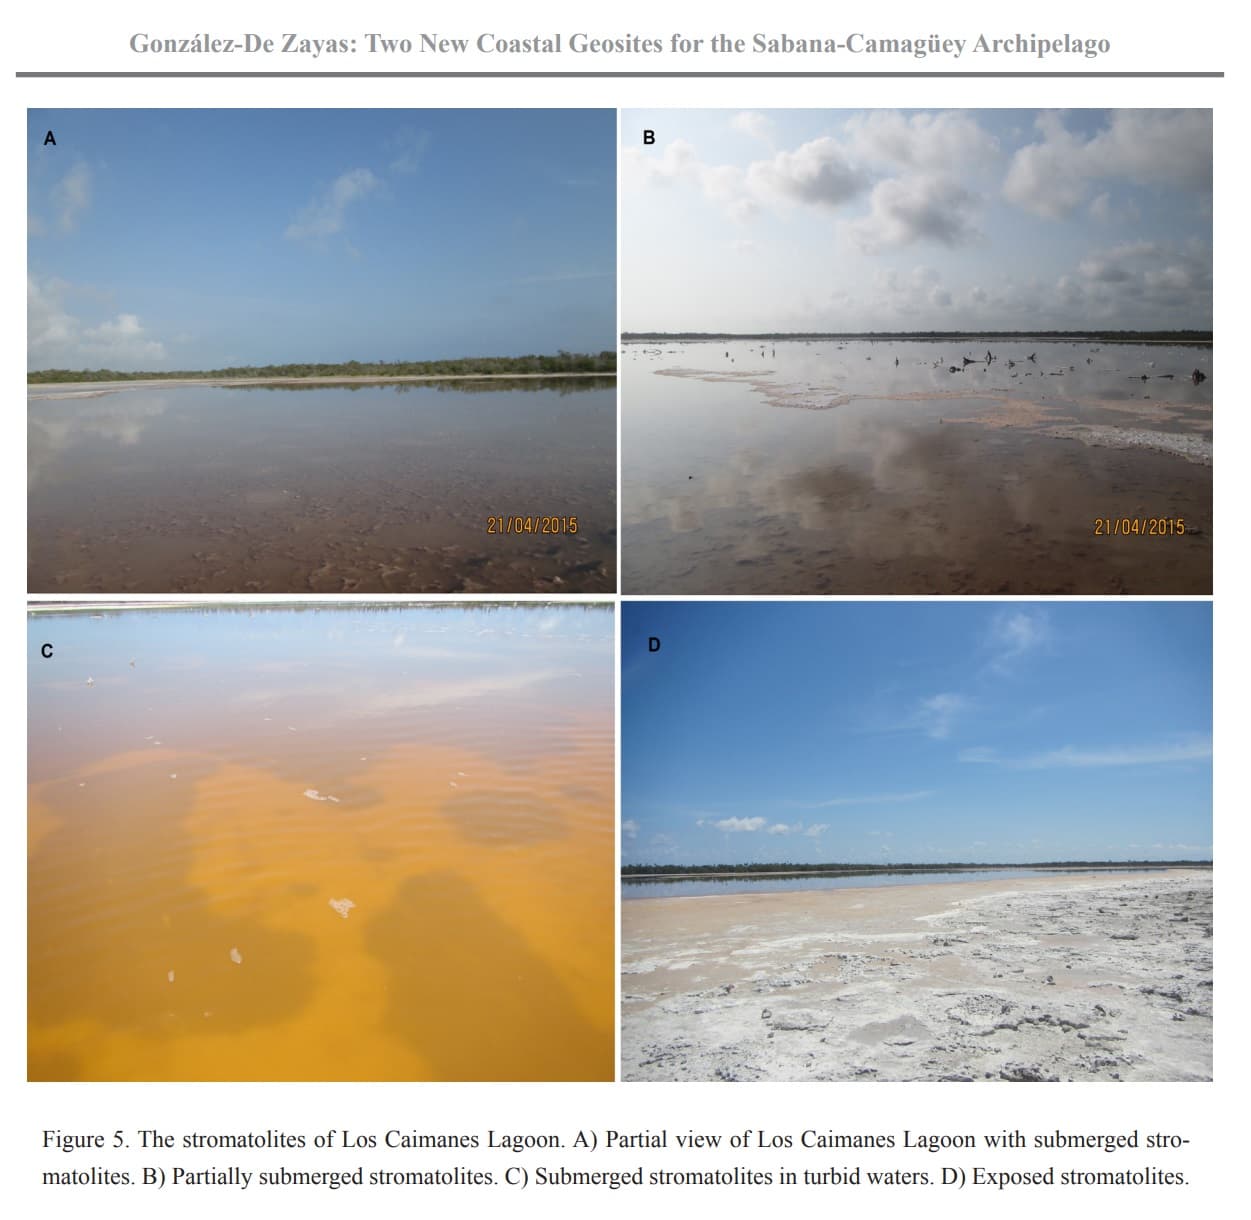 Proposal for Geoconservation of Two New Coastal Geosites for the Sabana-Camagüey Archipelago, Cuba Los Caimanes and El Jato Lagoons